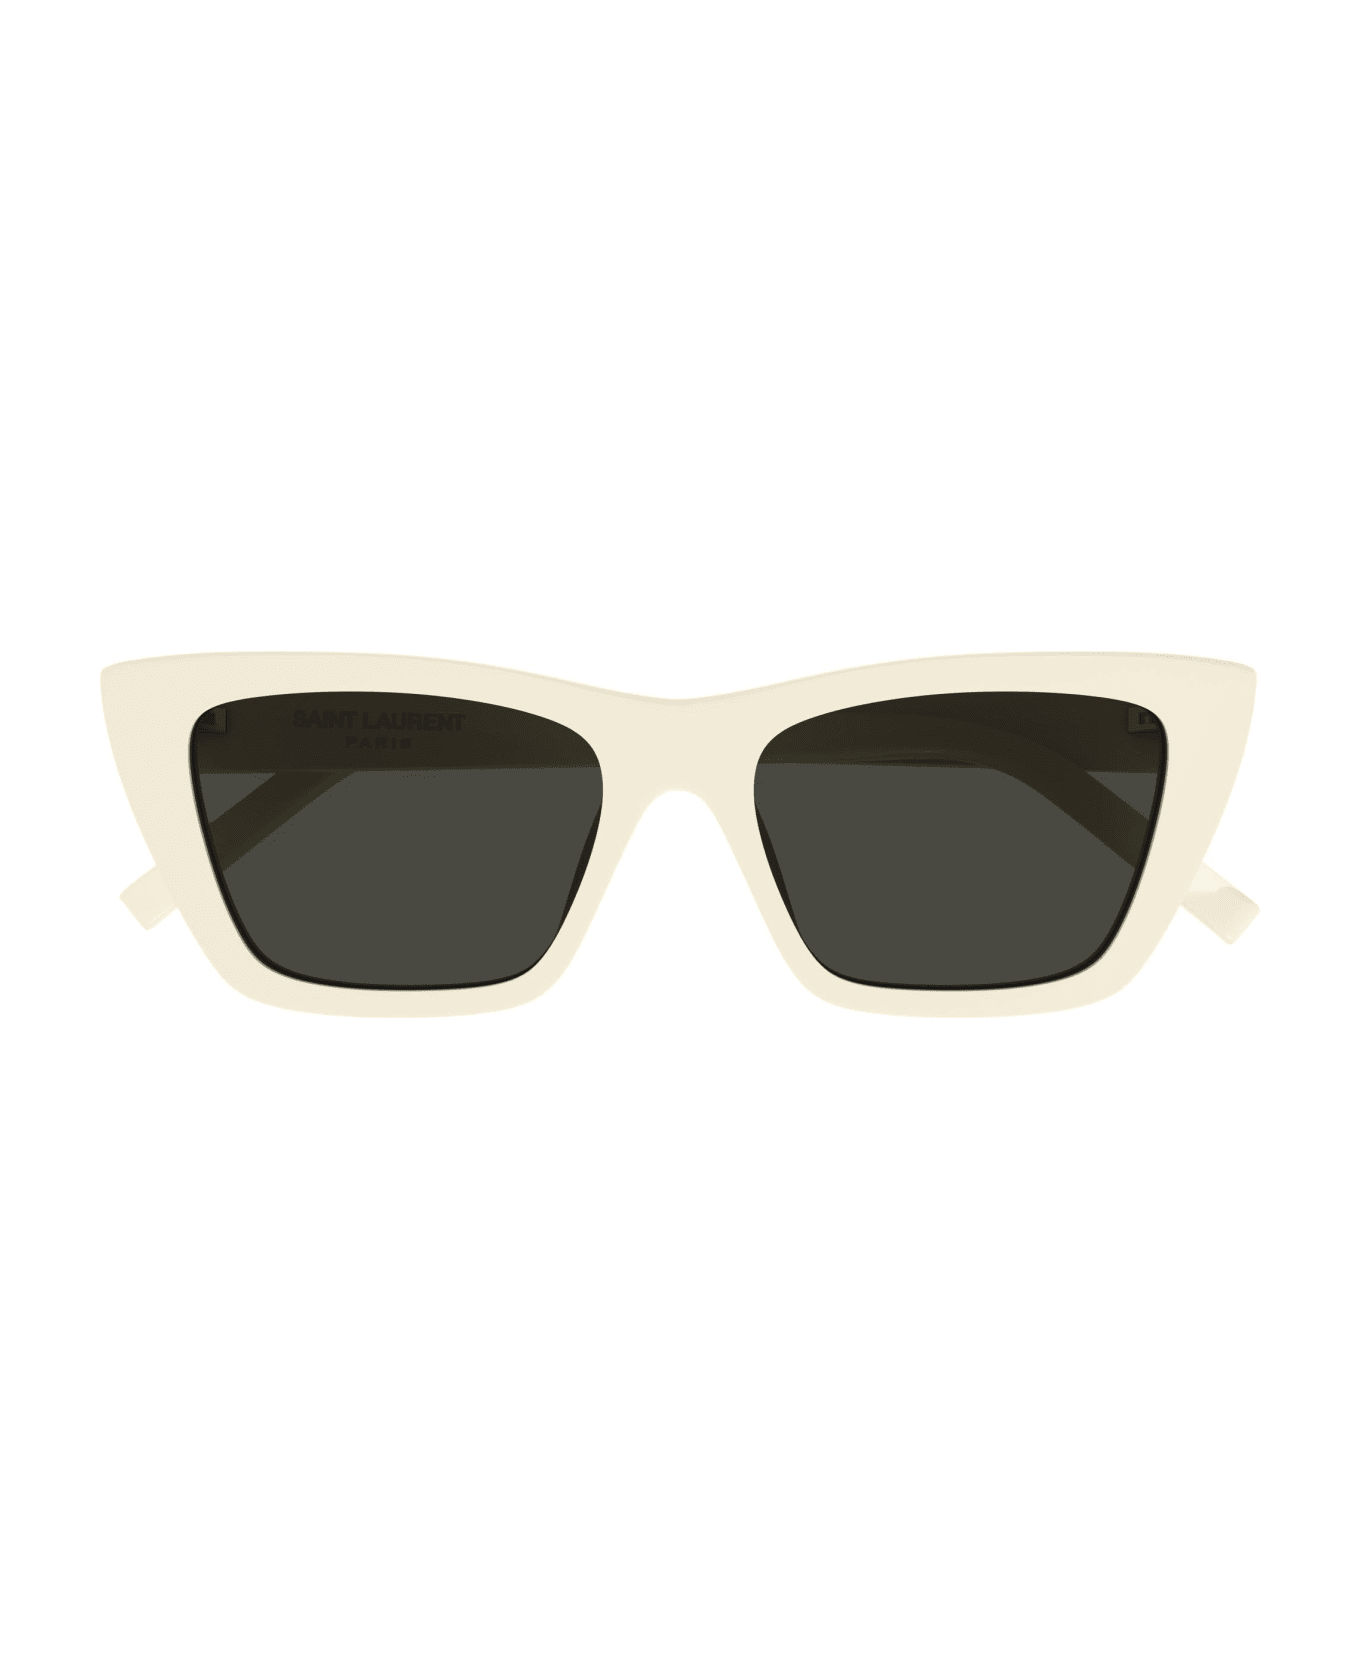 Saint Laurent Eyewear Sunglasses - Avorio/Grigio